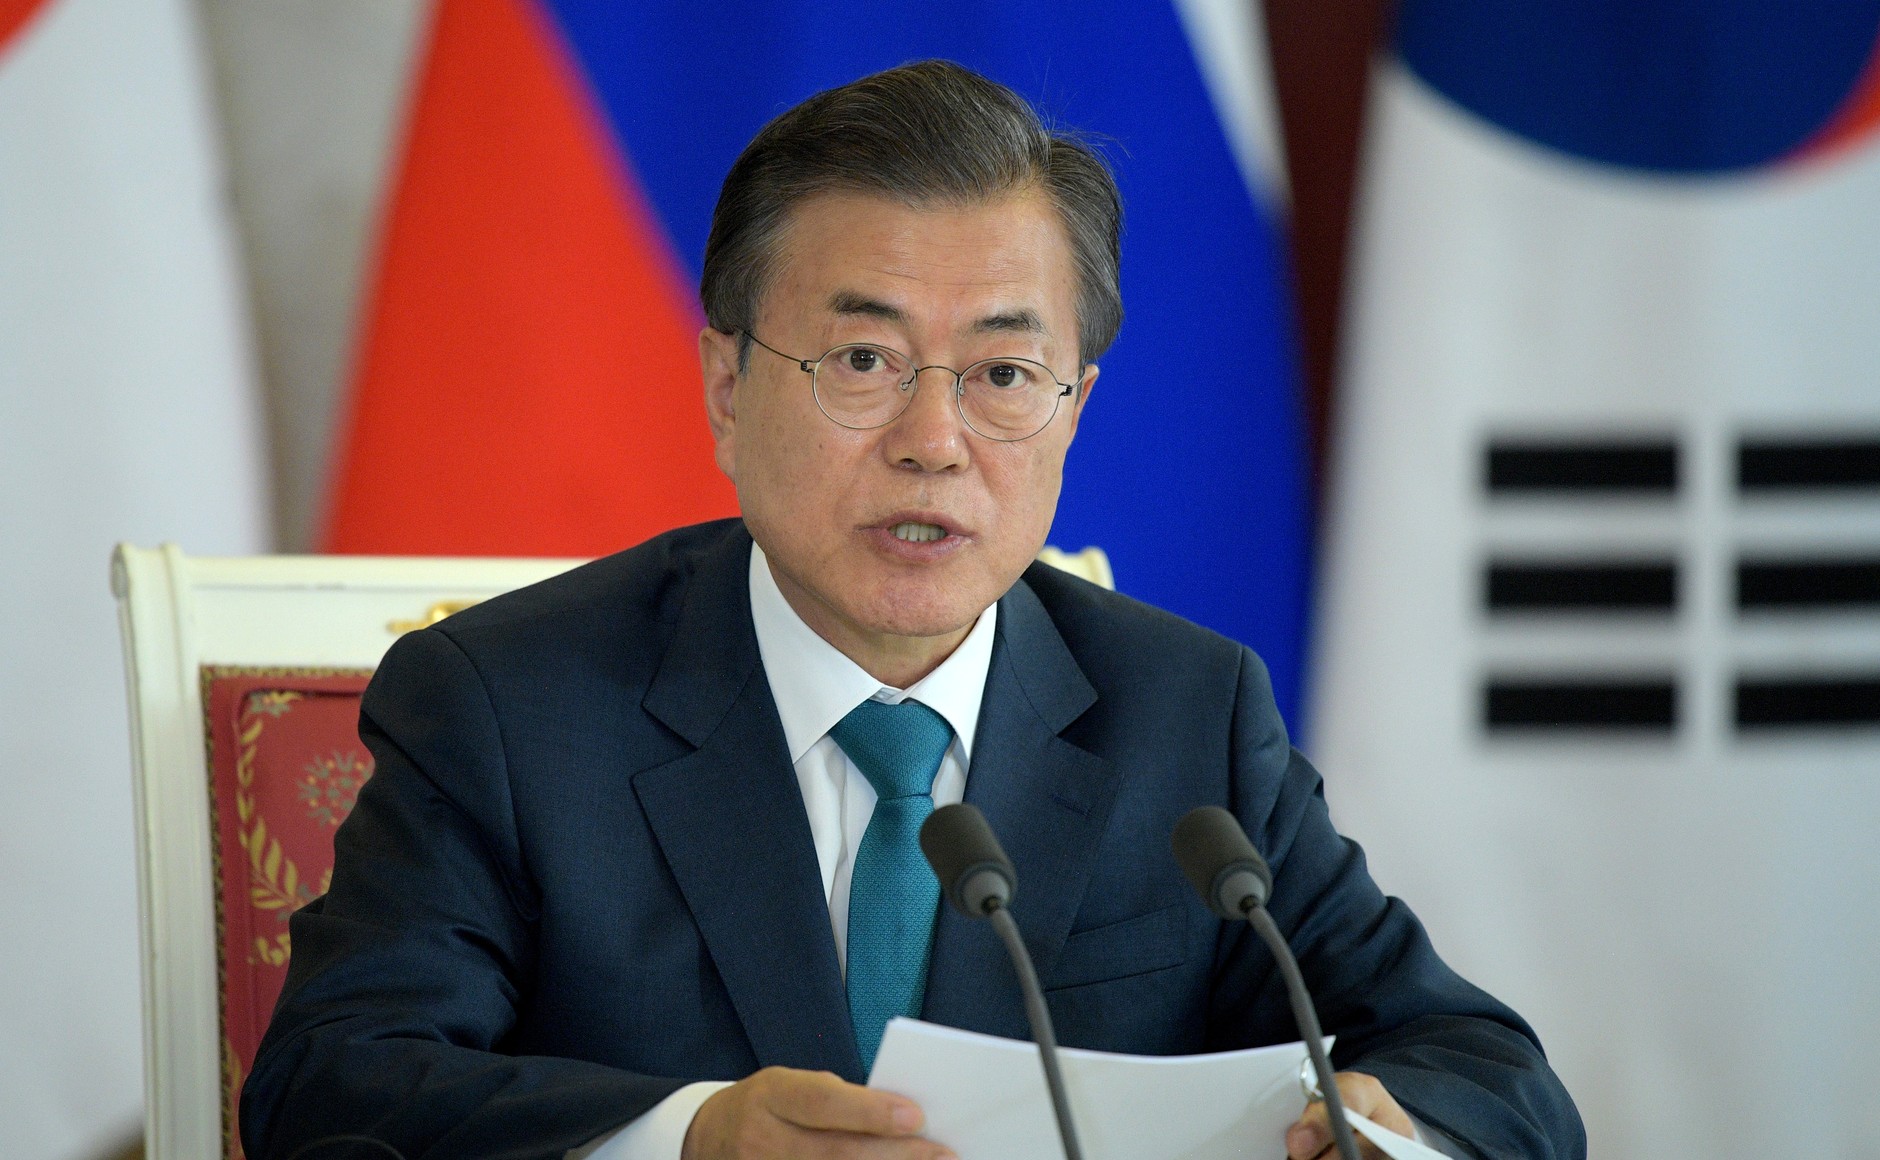 S.Korea ready for talks with Japan to improve ties, Moon tells Suga